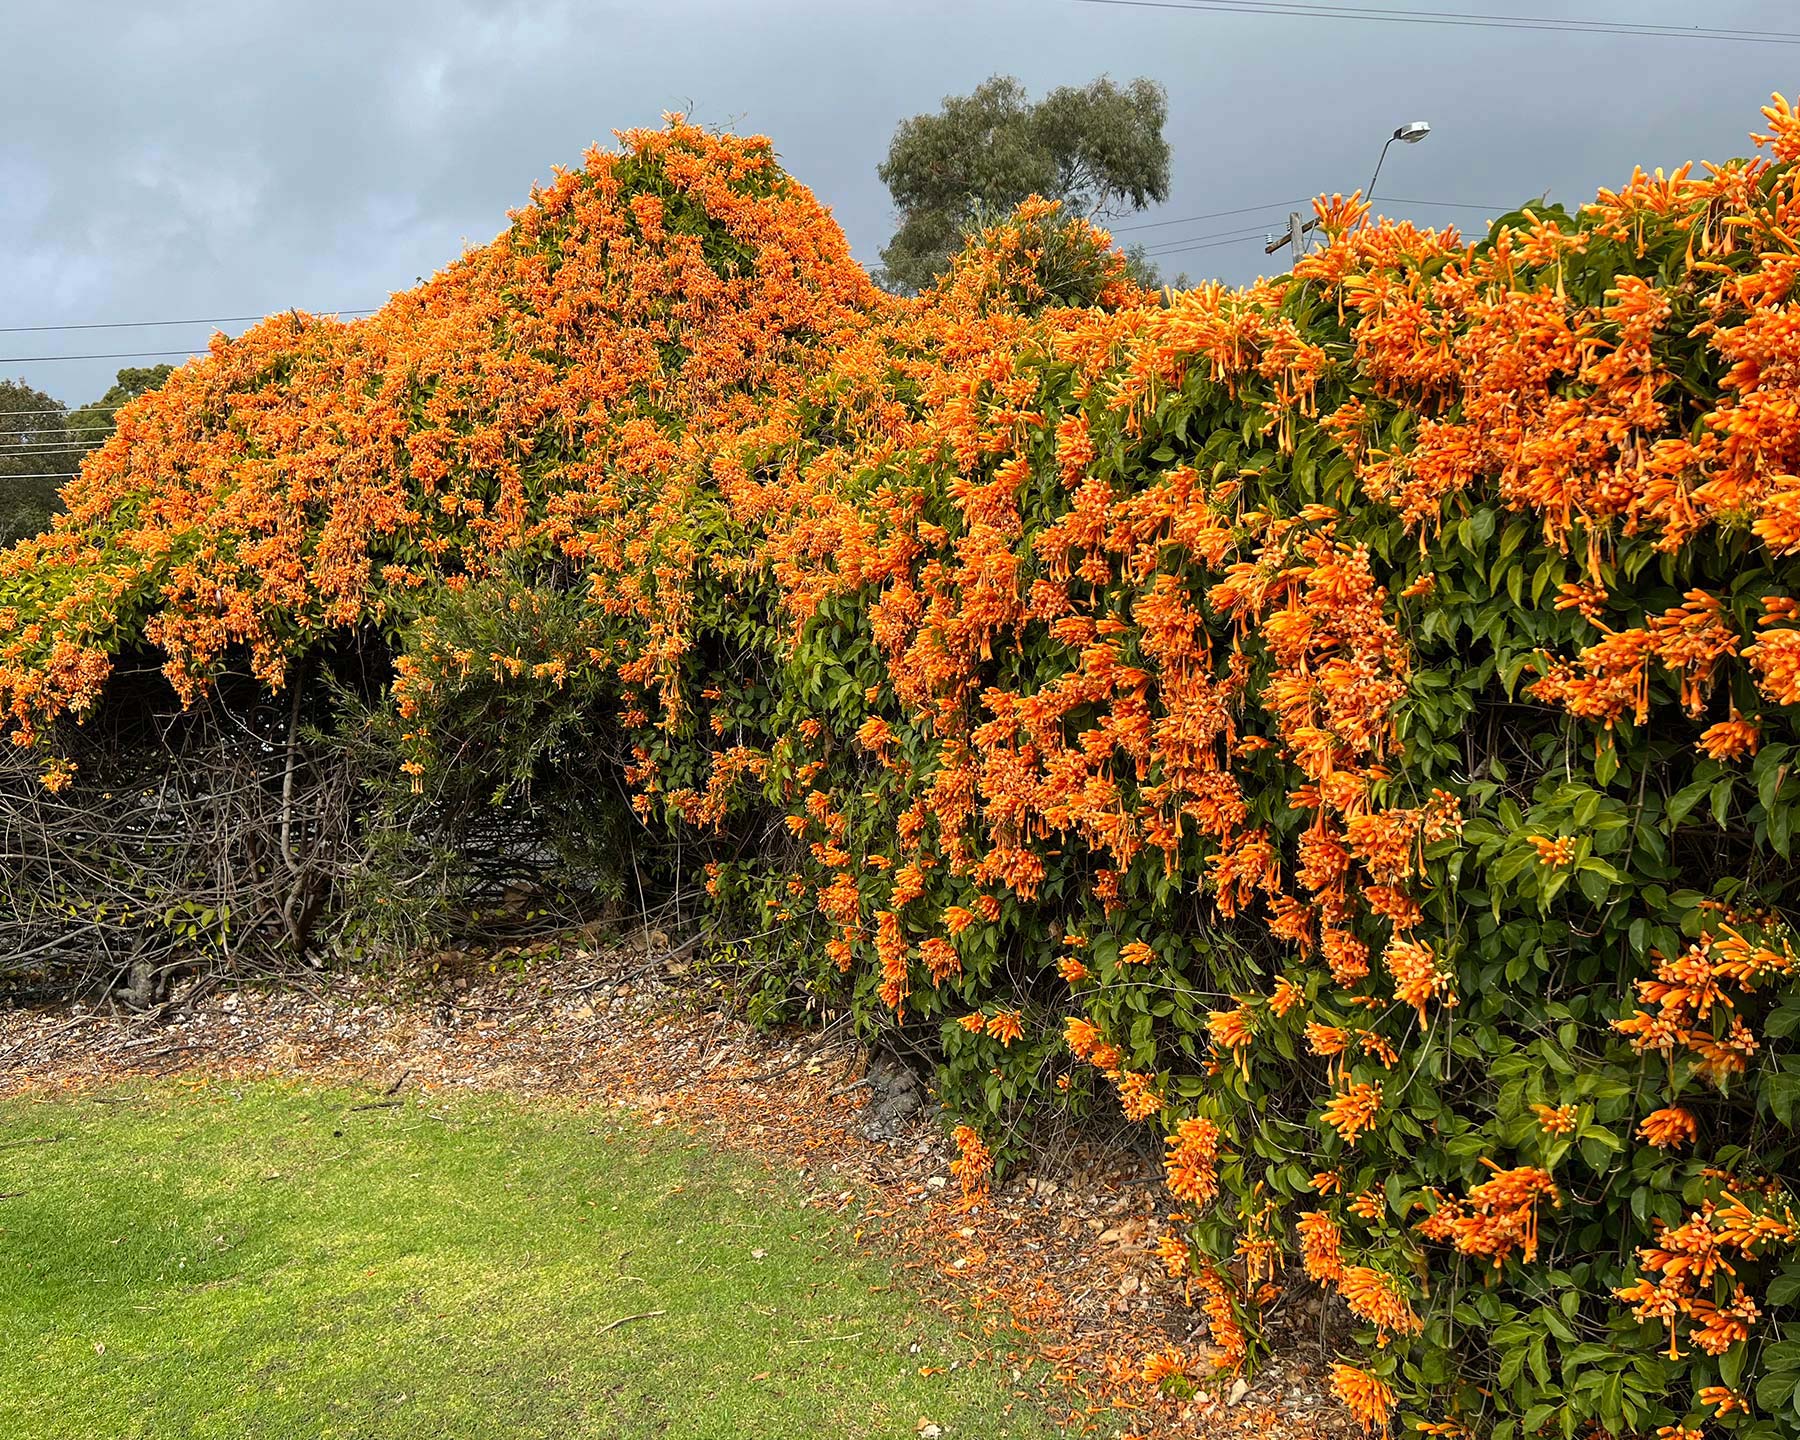 Pyrostegia venusta - a winter wall of orange flowers